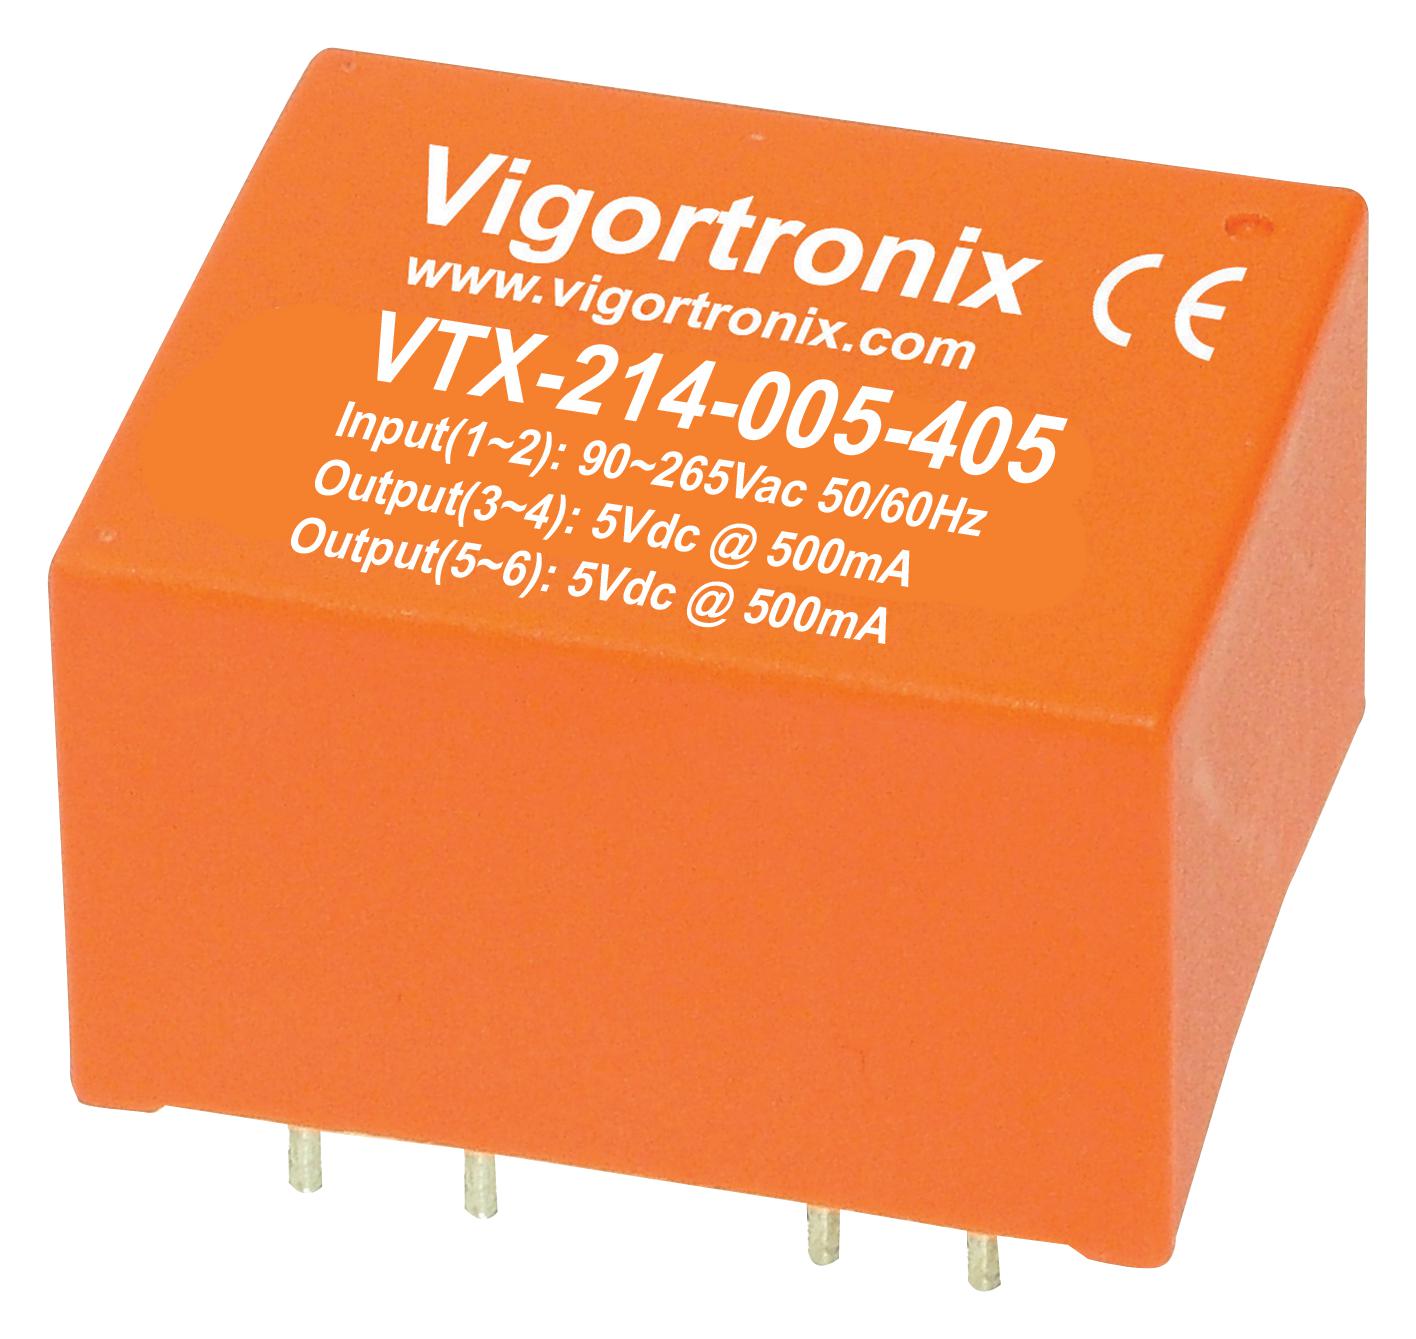 VTX-214-005-0512 POWER SUPPLY, AC-DC, 5V, 0.5A VIGORTRONIX